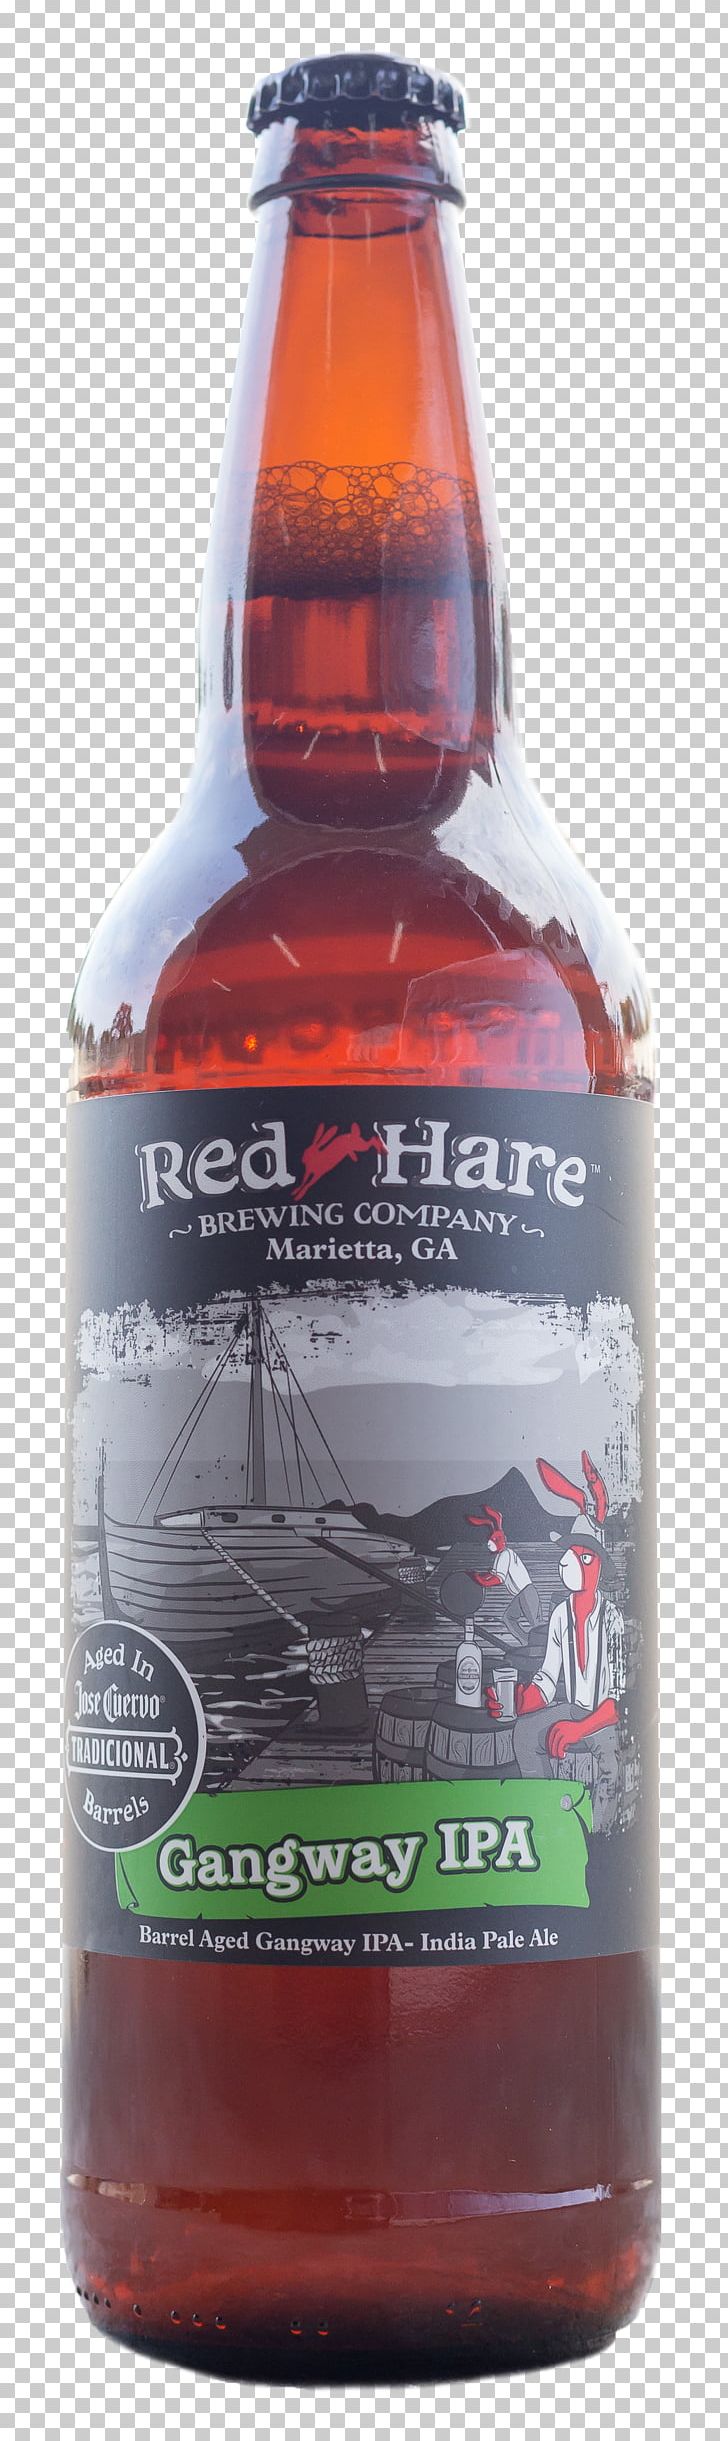 India Pale Ale Red Hare Brewing Company Glass Bottle Beer PNG, Clipart, Ale, Barrel, Beer, Beer Bottle, Bottle Free PNG Download